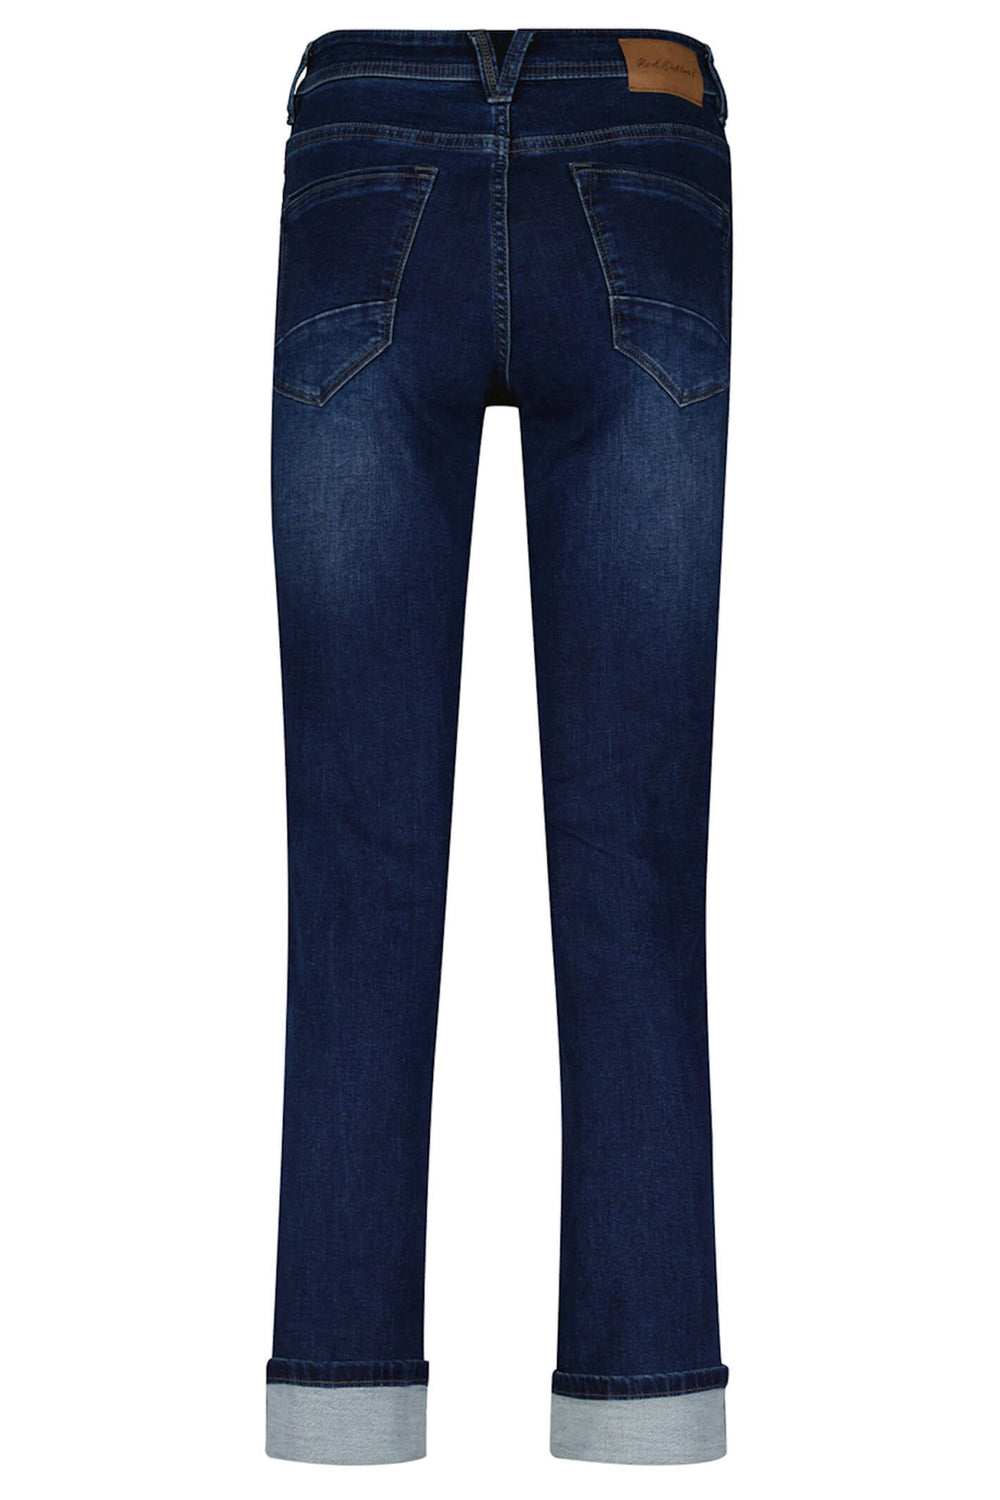 Red Button SRB4054 Kate Blue Turn Up Denim Jeans - Olivia Grace Fashion